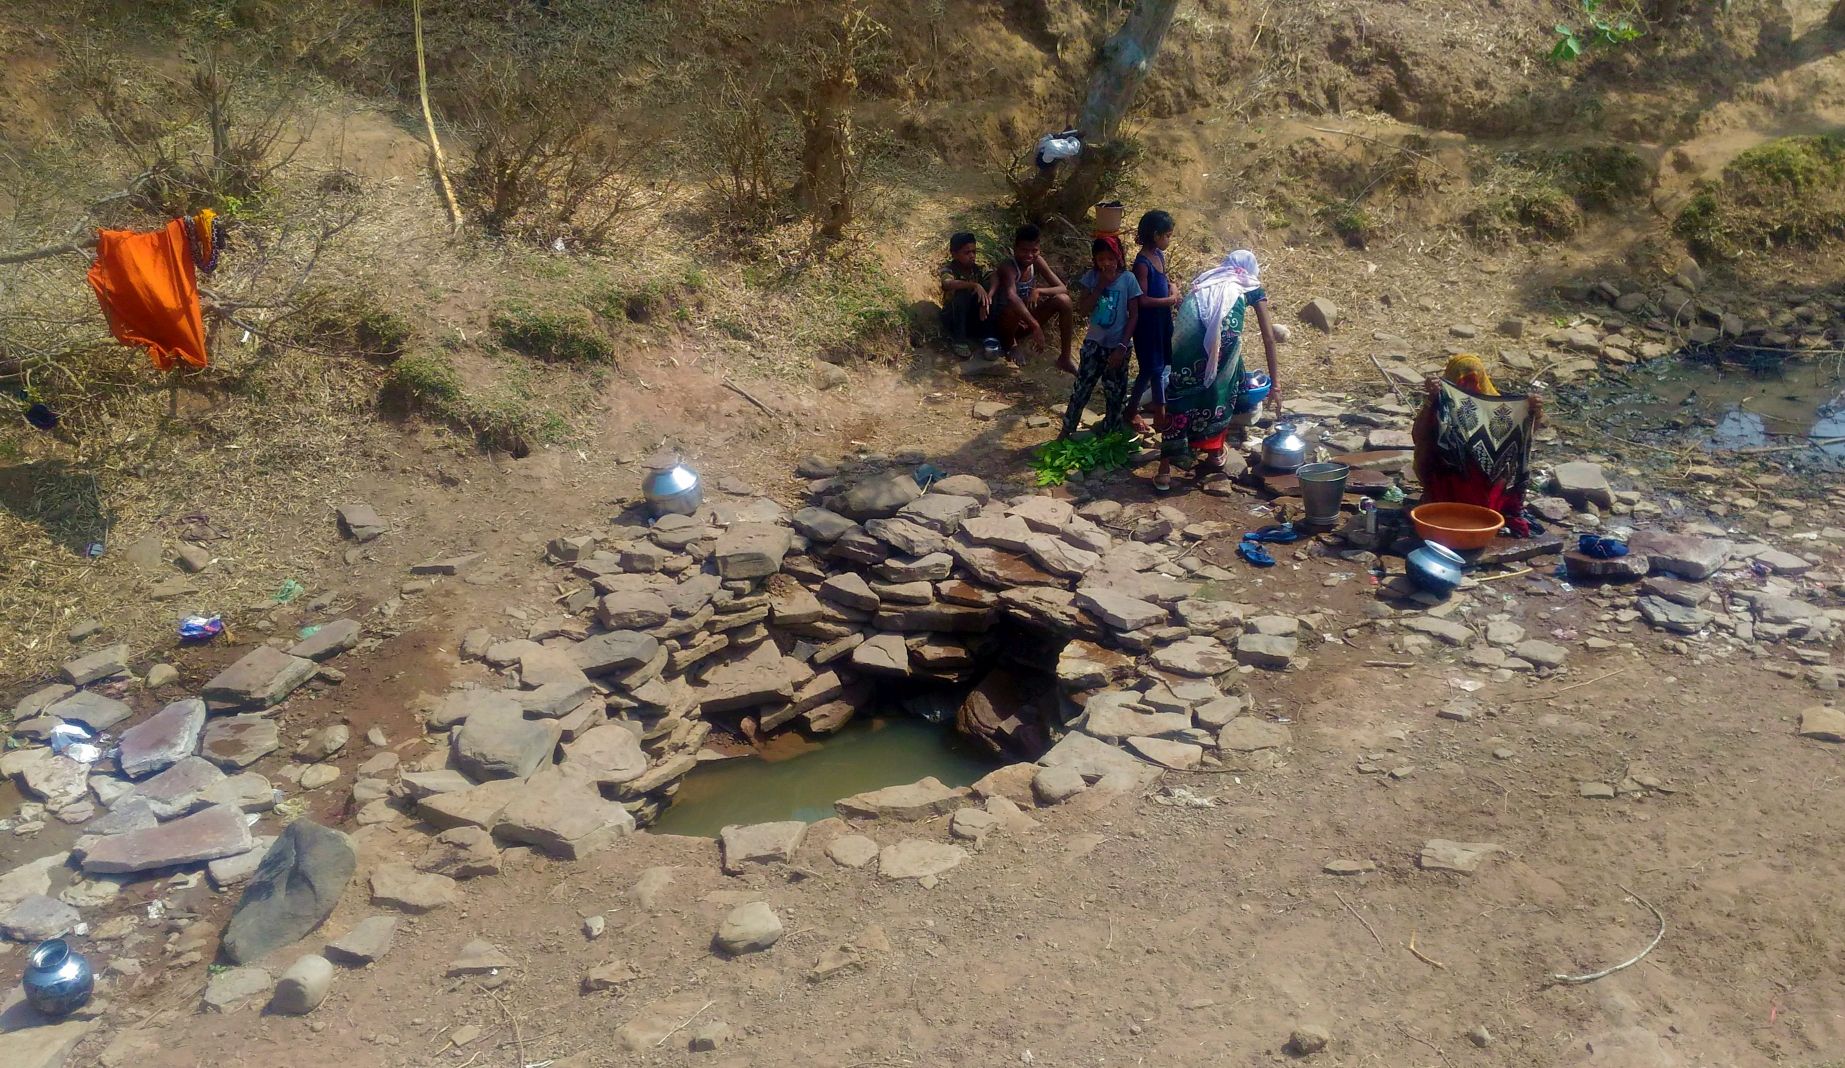 Only perennial spring as drinking water source in Kathayi village, June 2019 (Image: Seema Ravandale)